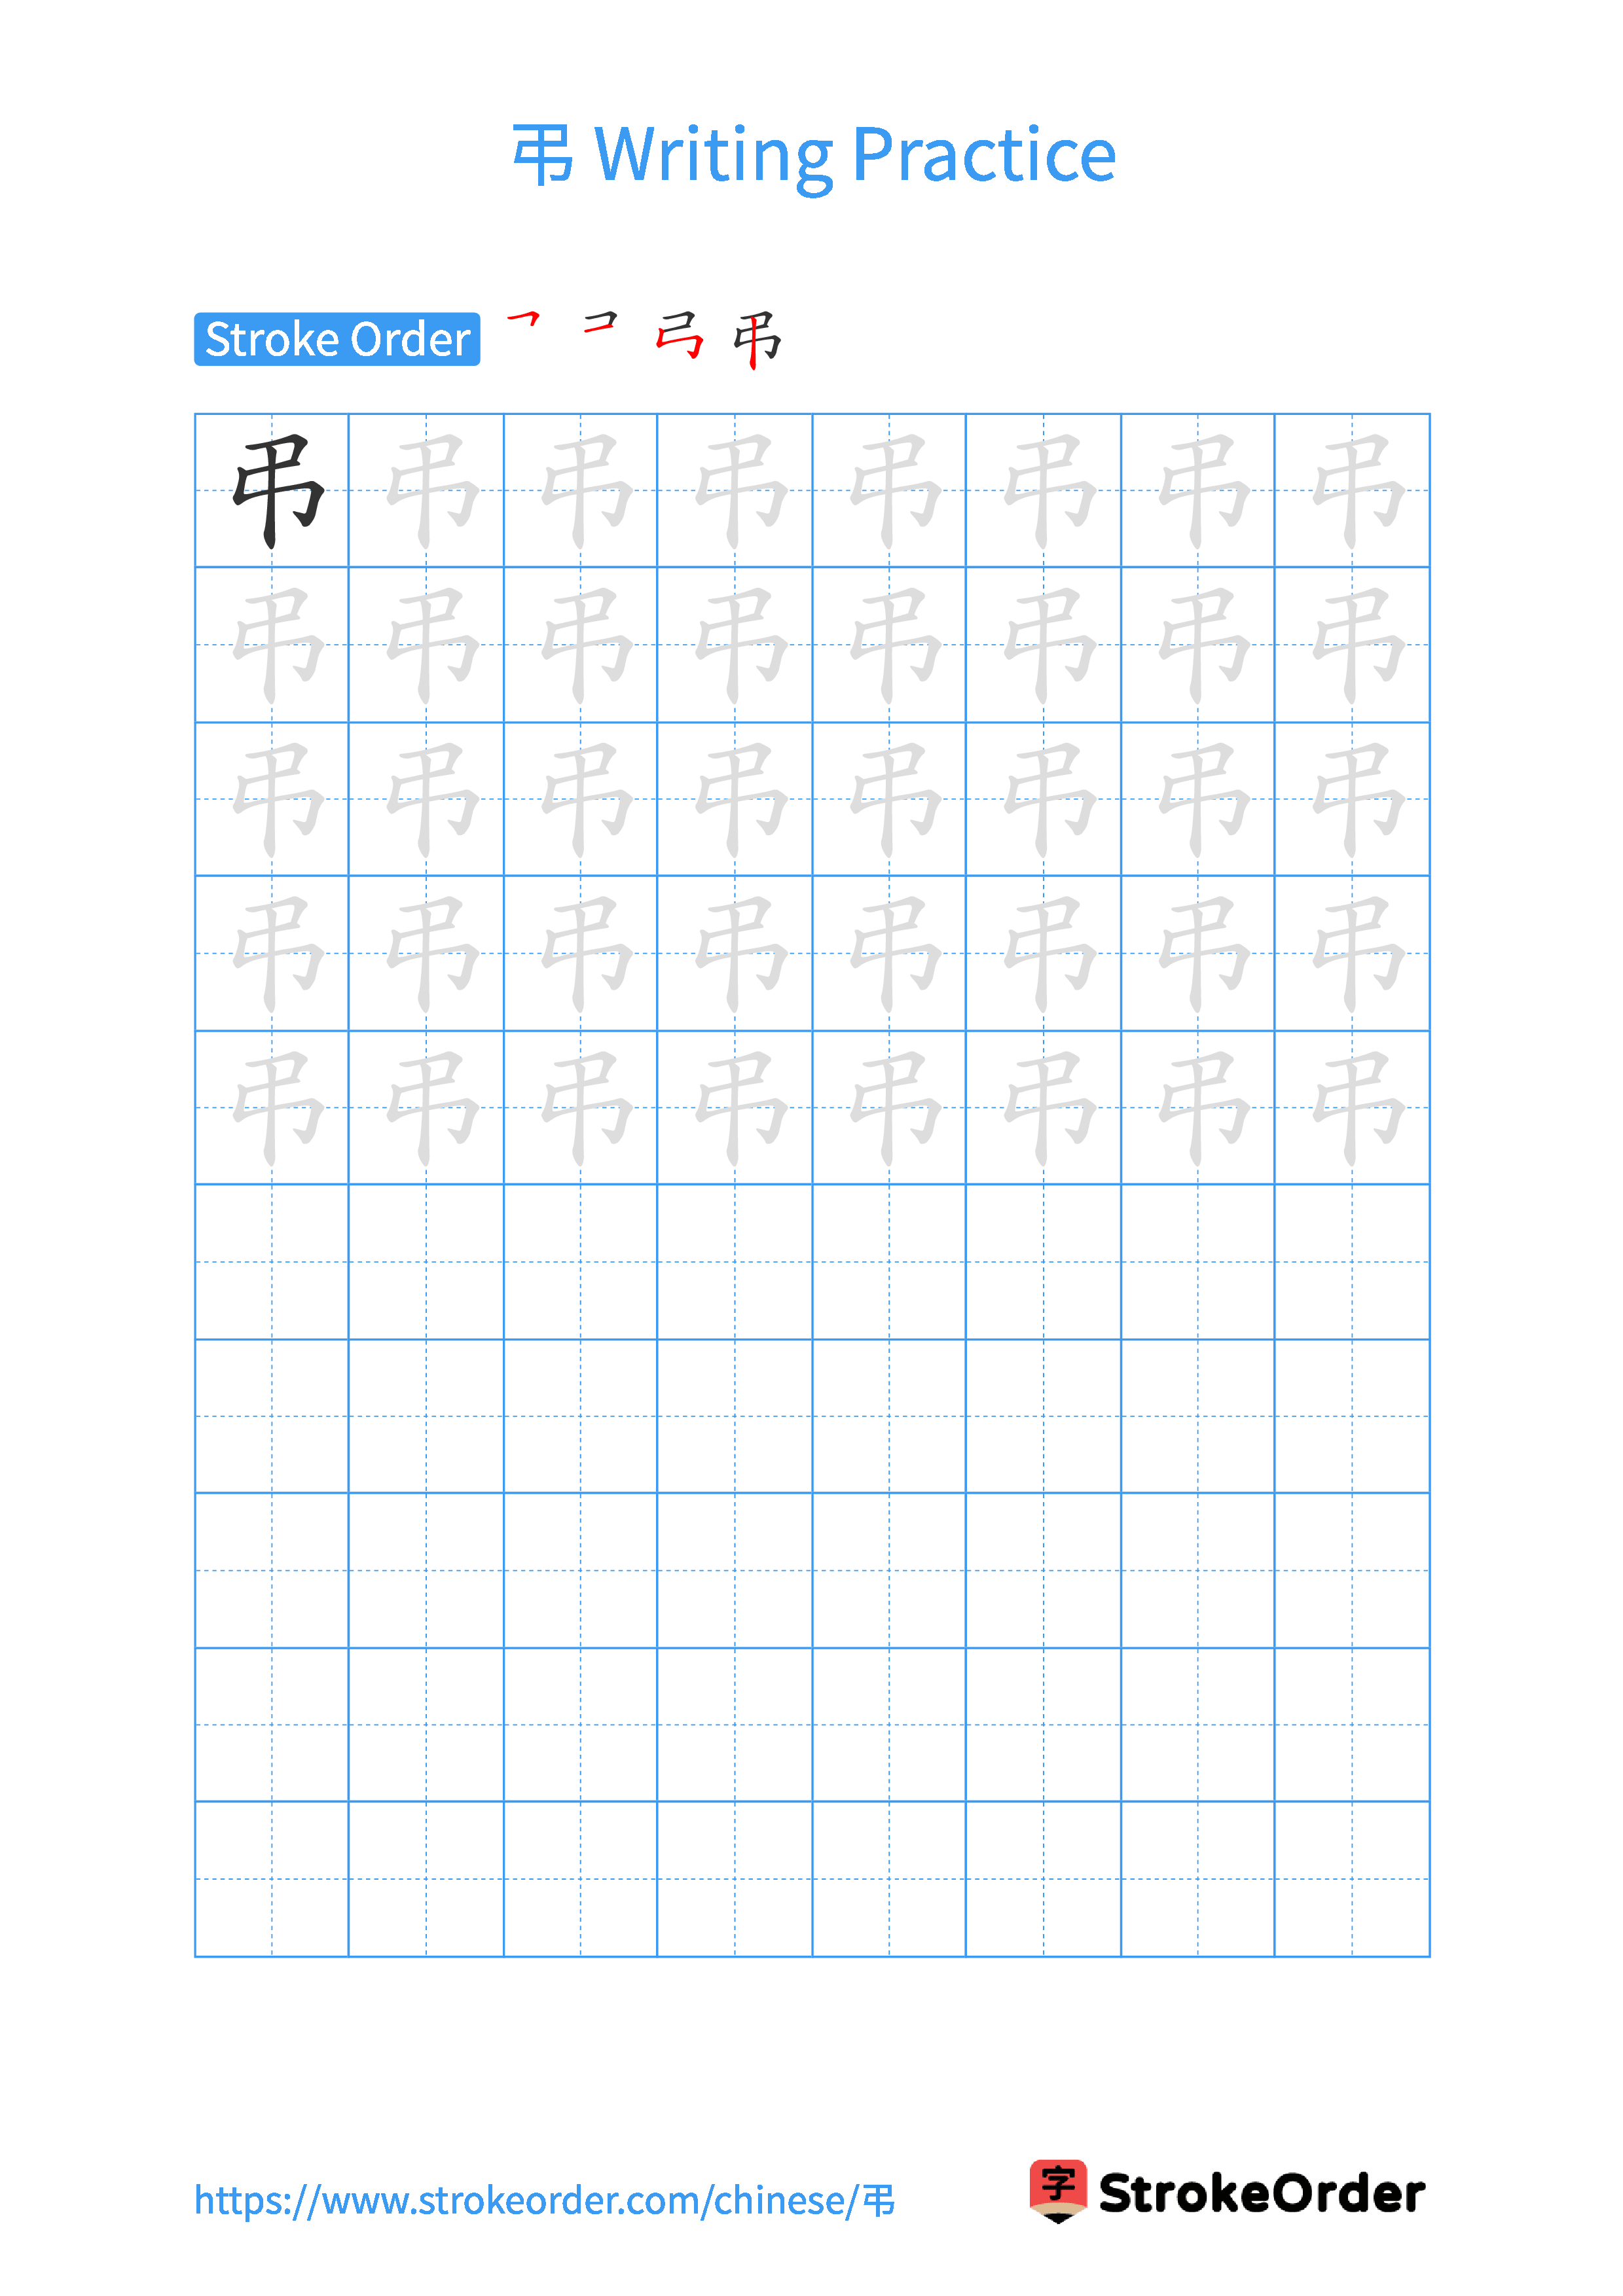 Printable Handwriting Practice Worksheet of the Chinese character 弔 in Portrait Orientation (Tian Zi Ge)